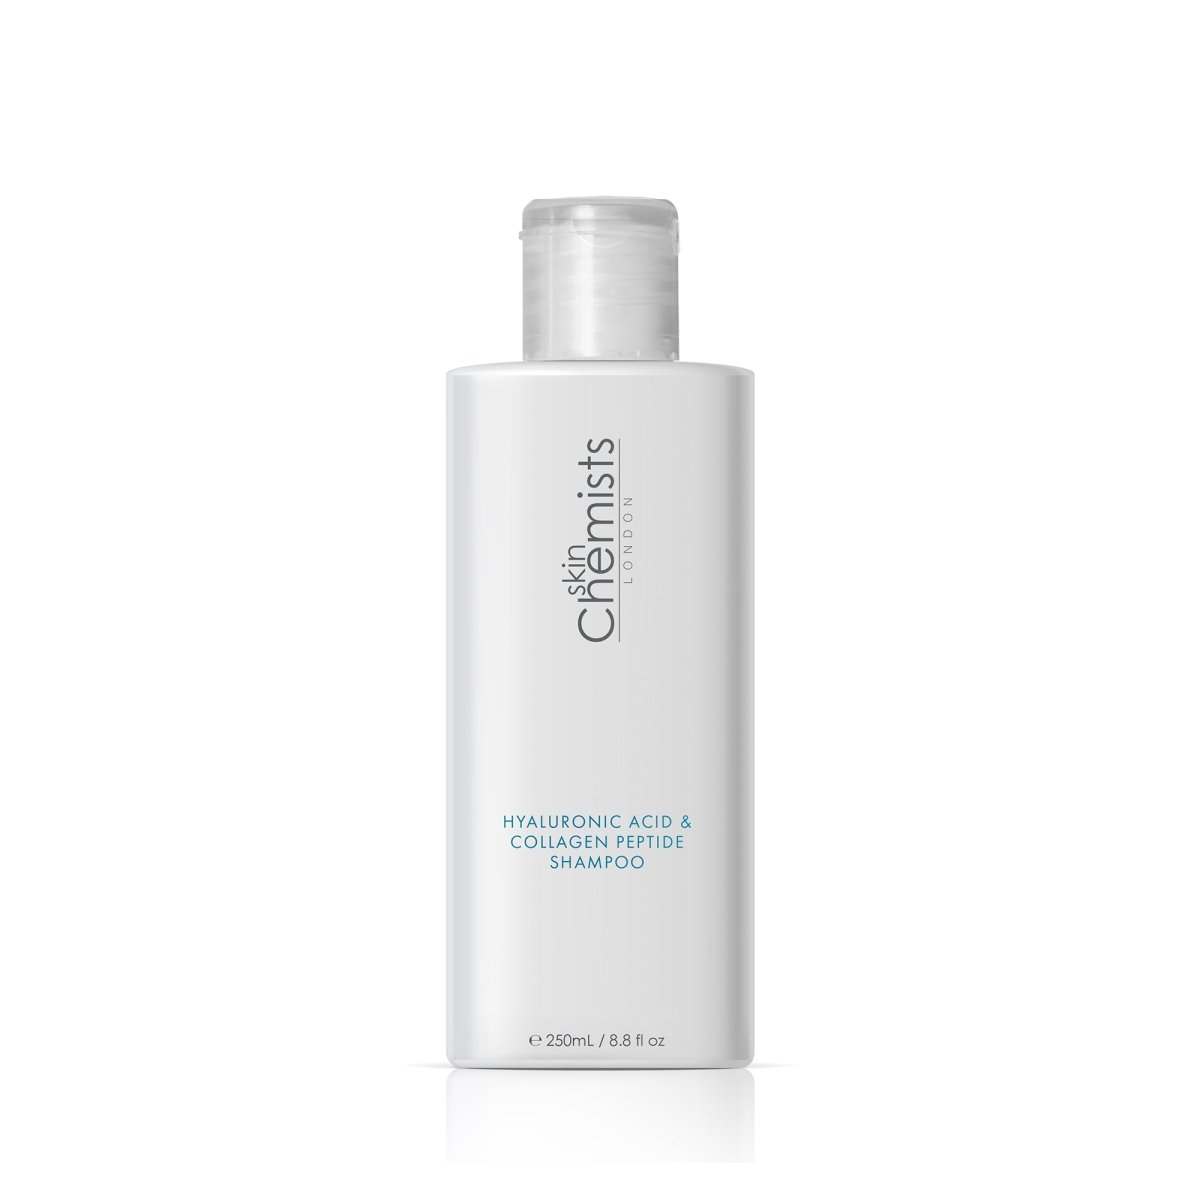 Hyaluronic Acid & Collagen Peptide Shampoo 250ml - skinChemists